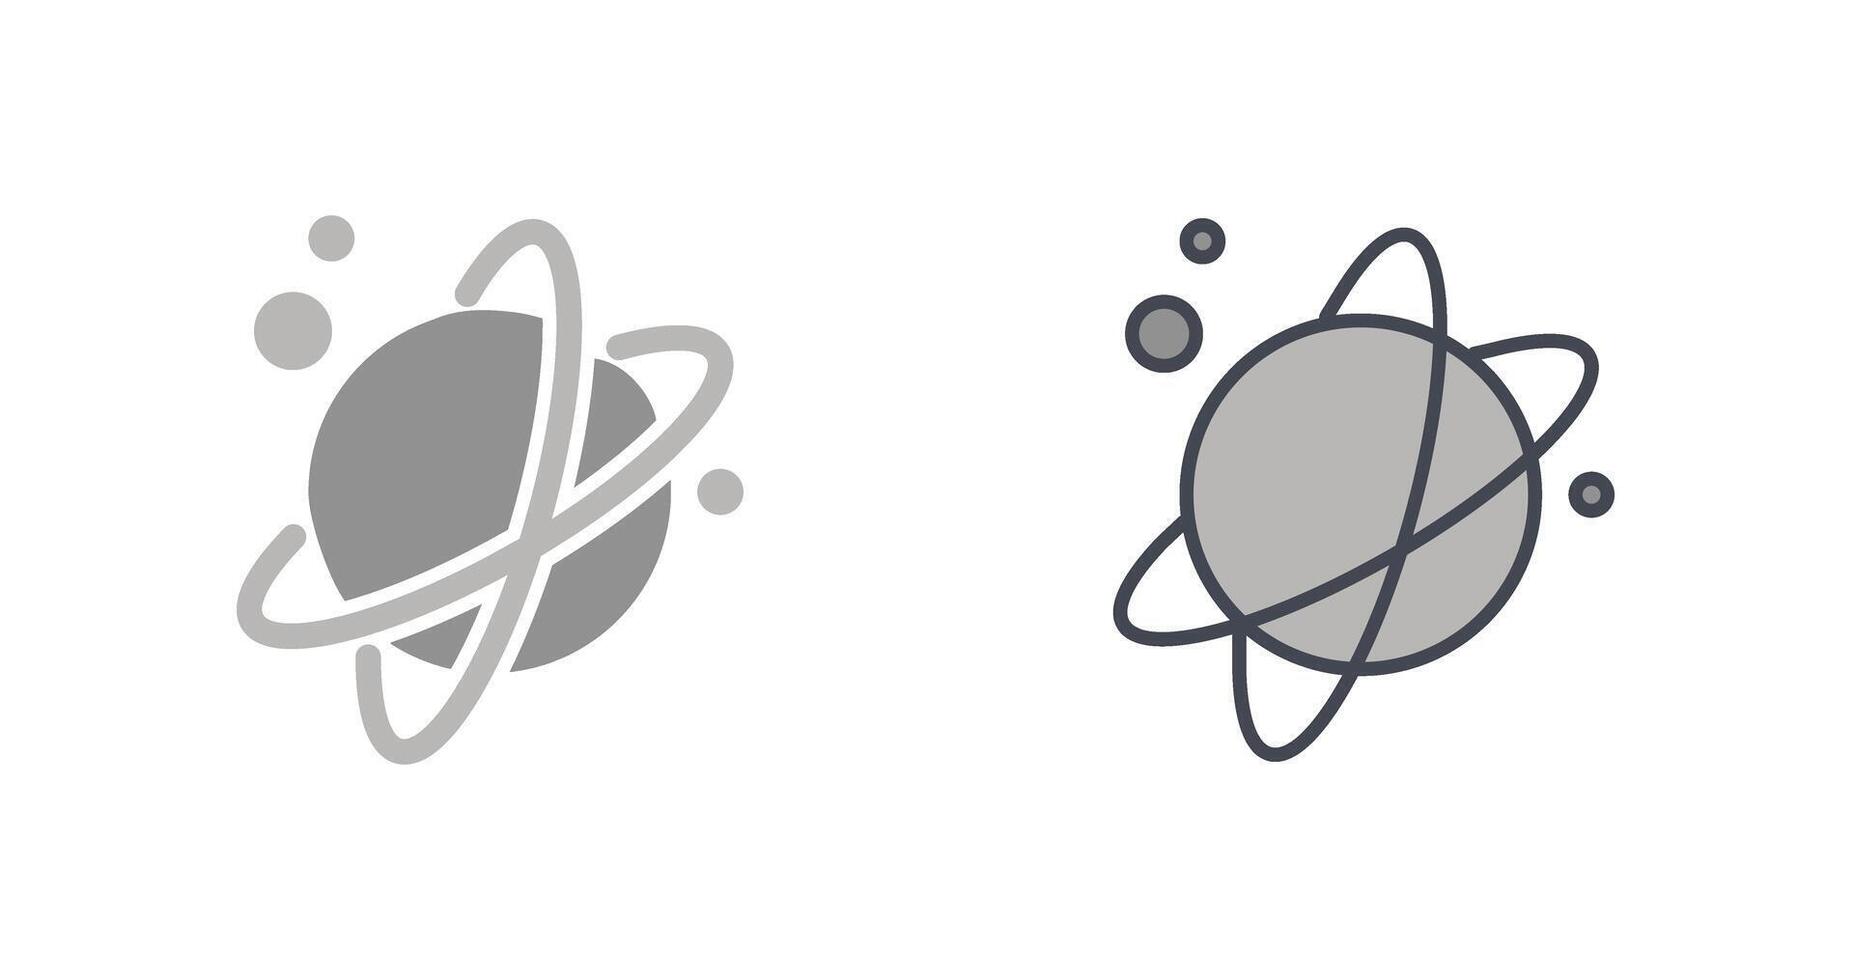 Planet Icon Design vector